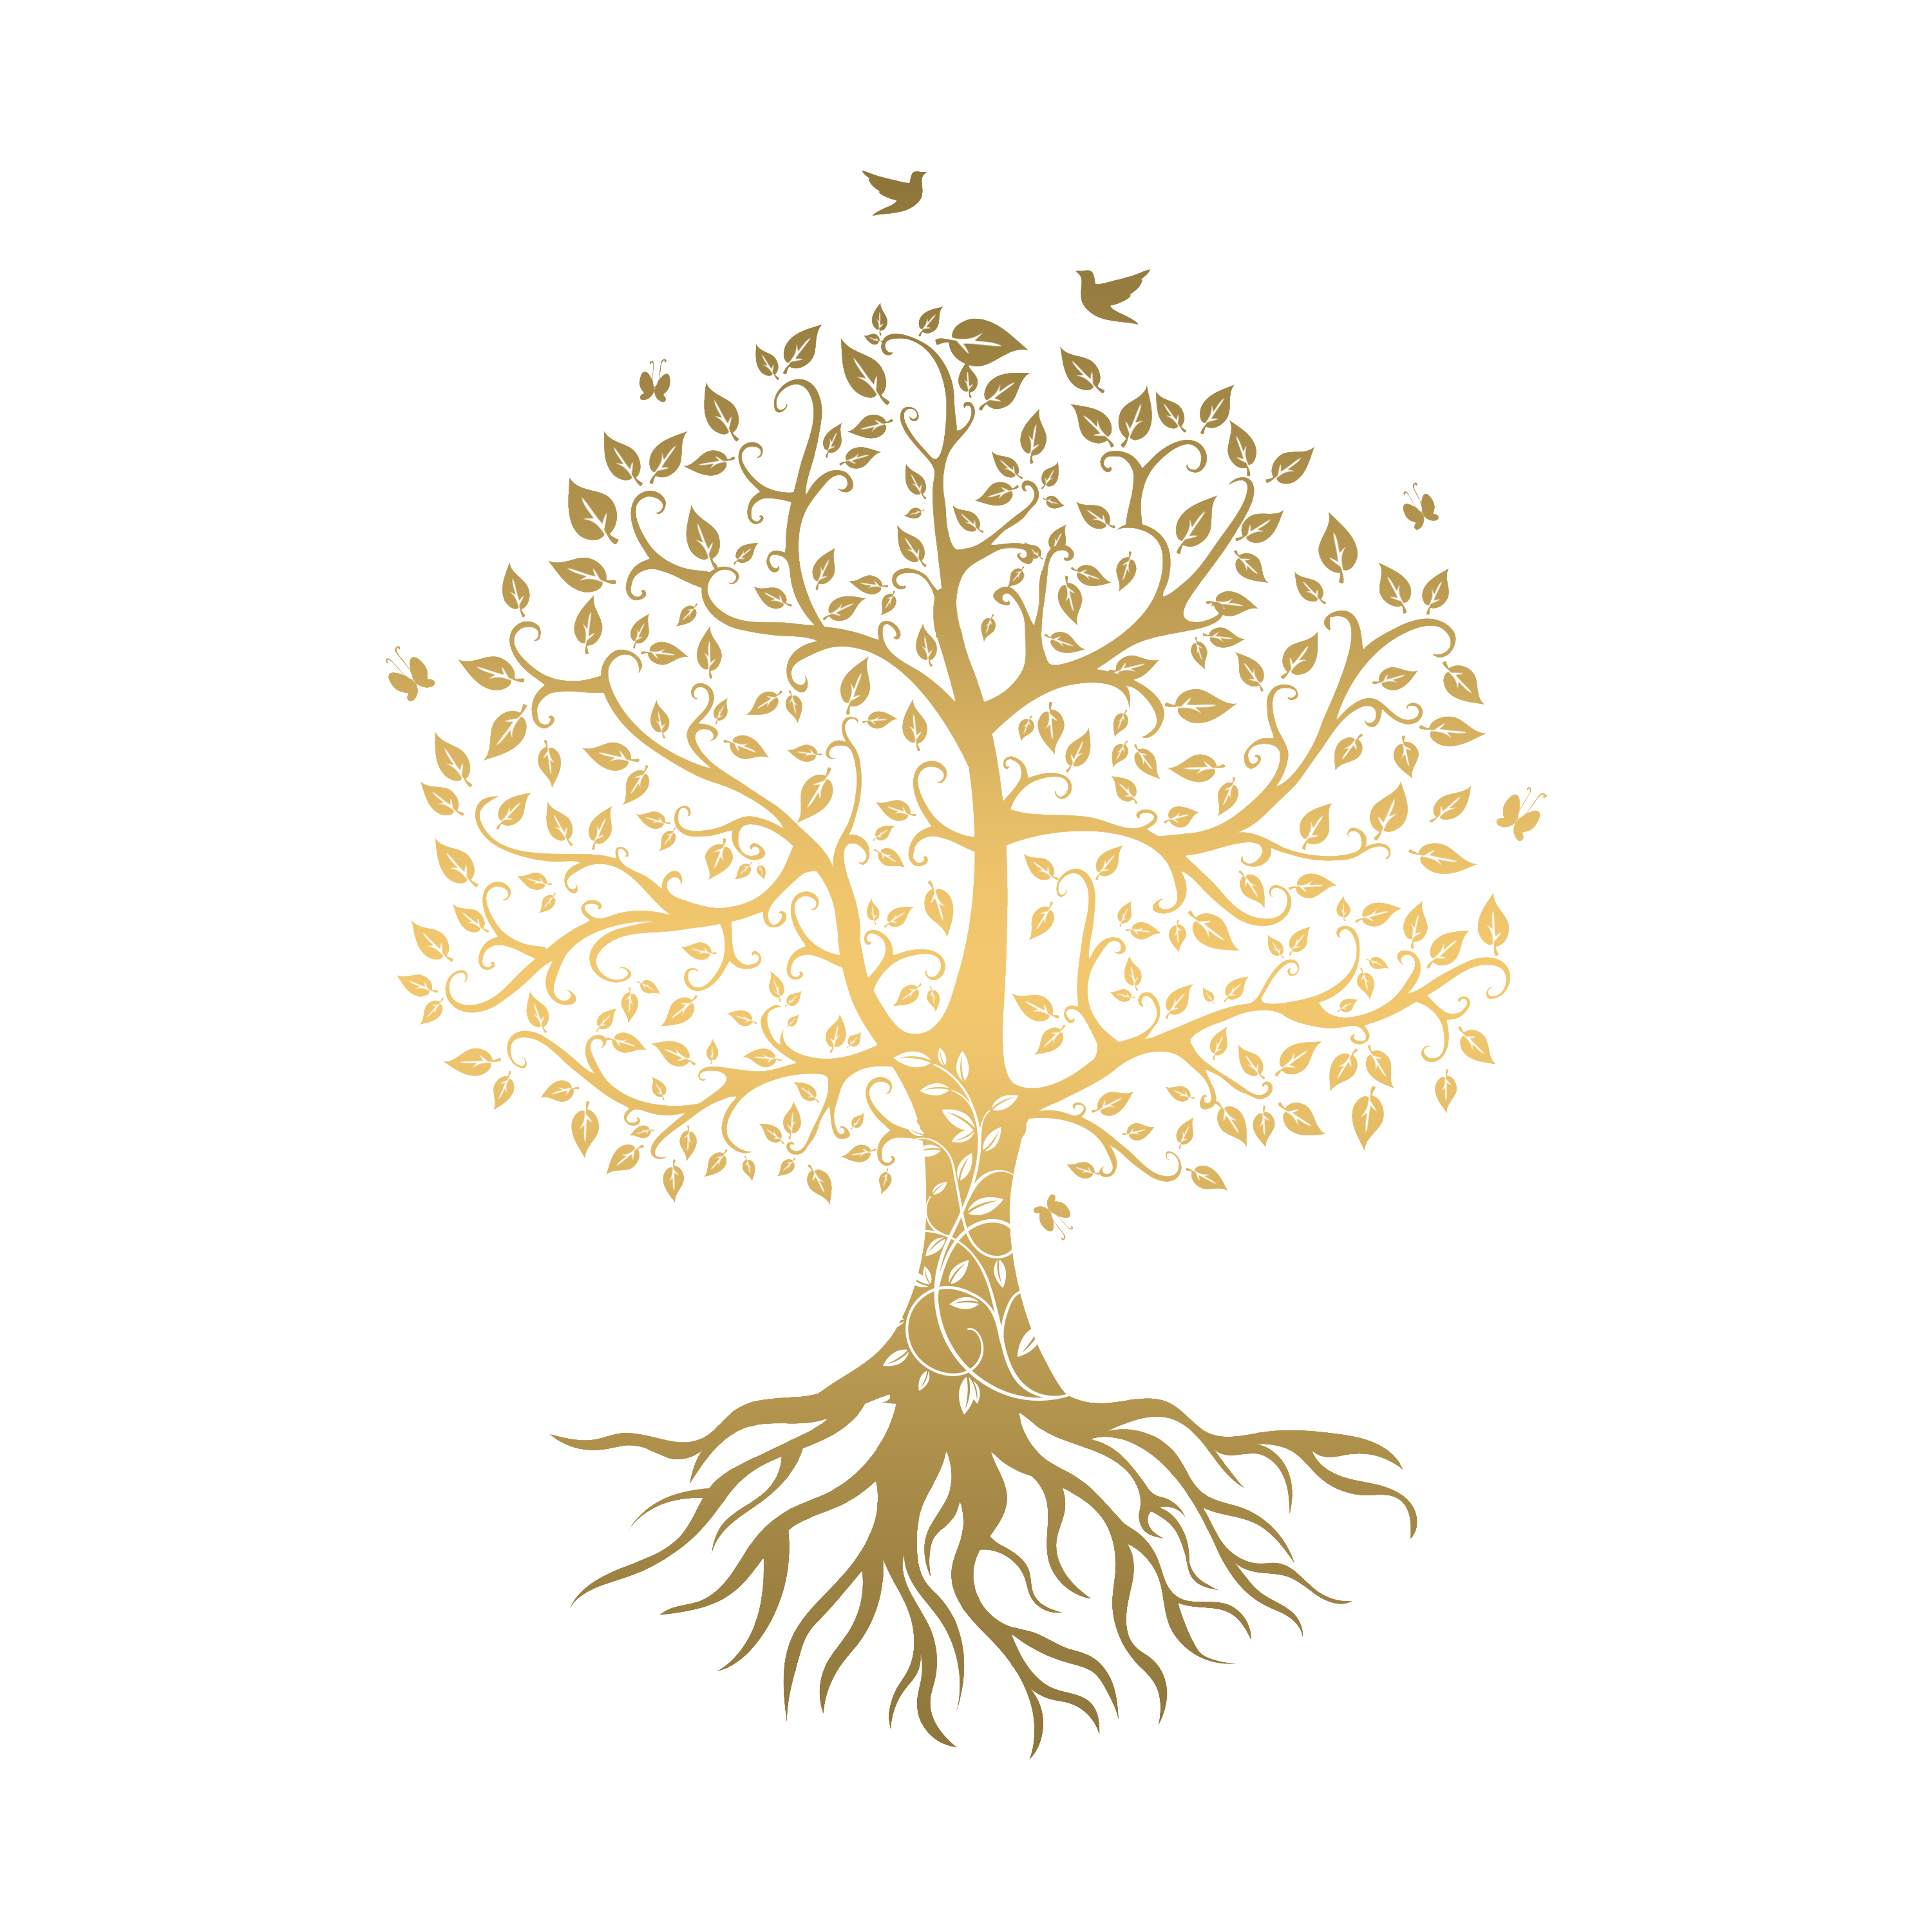 Lebensbaum-Logo